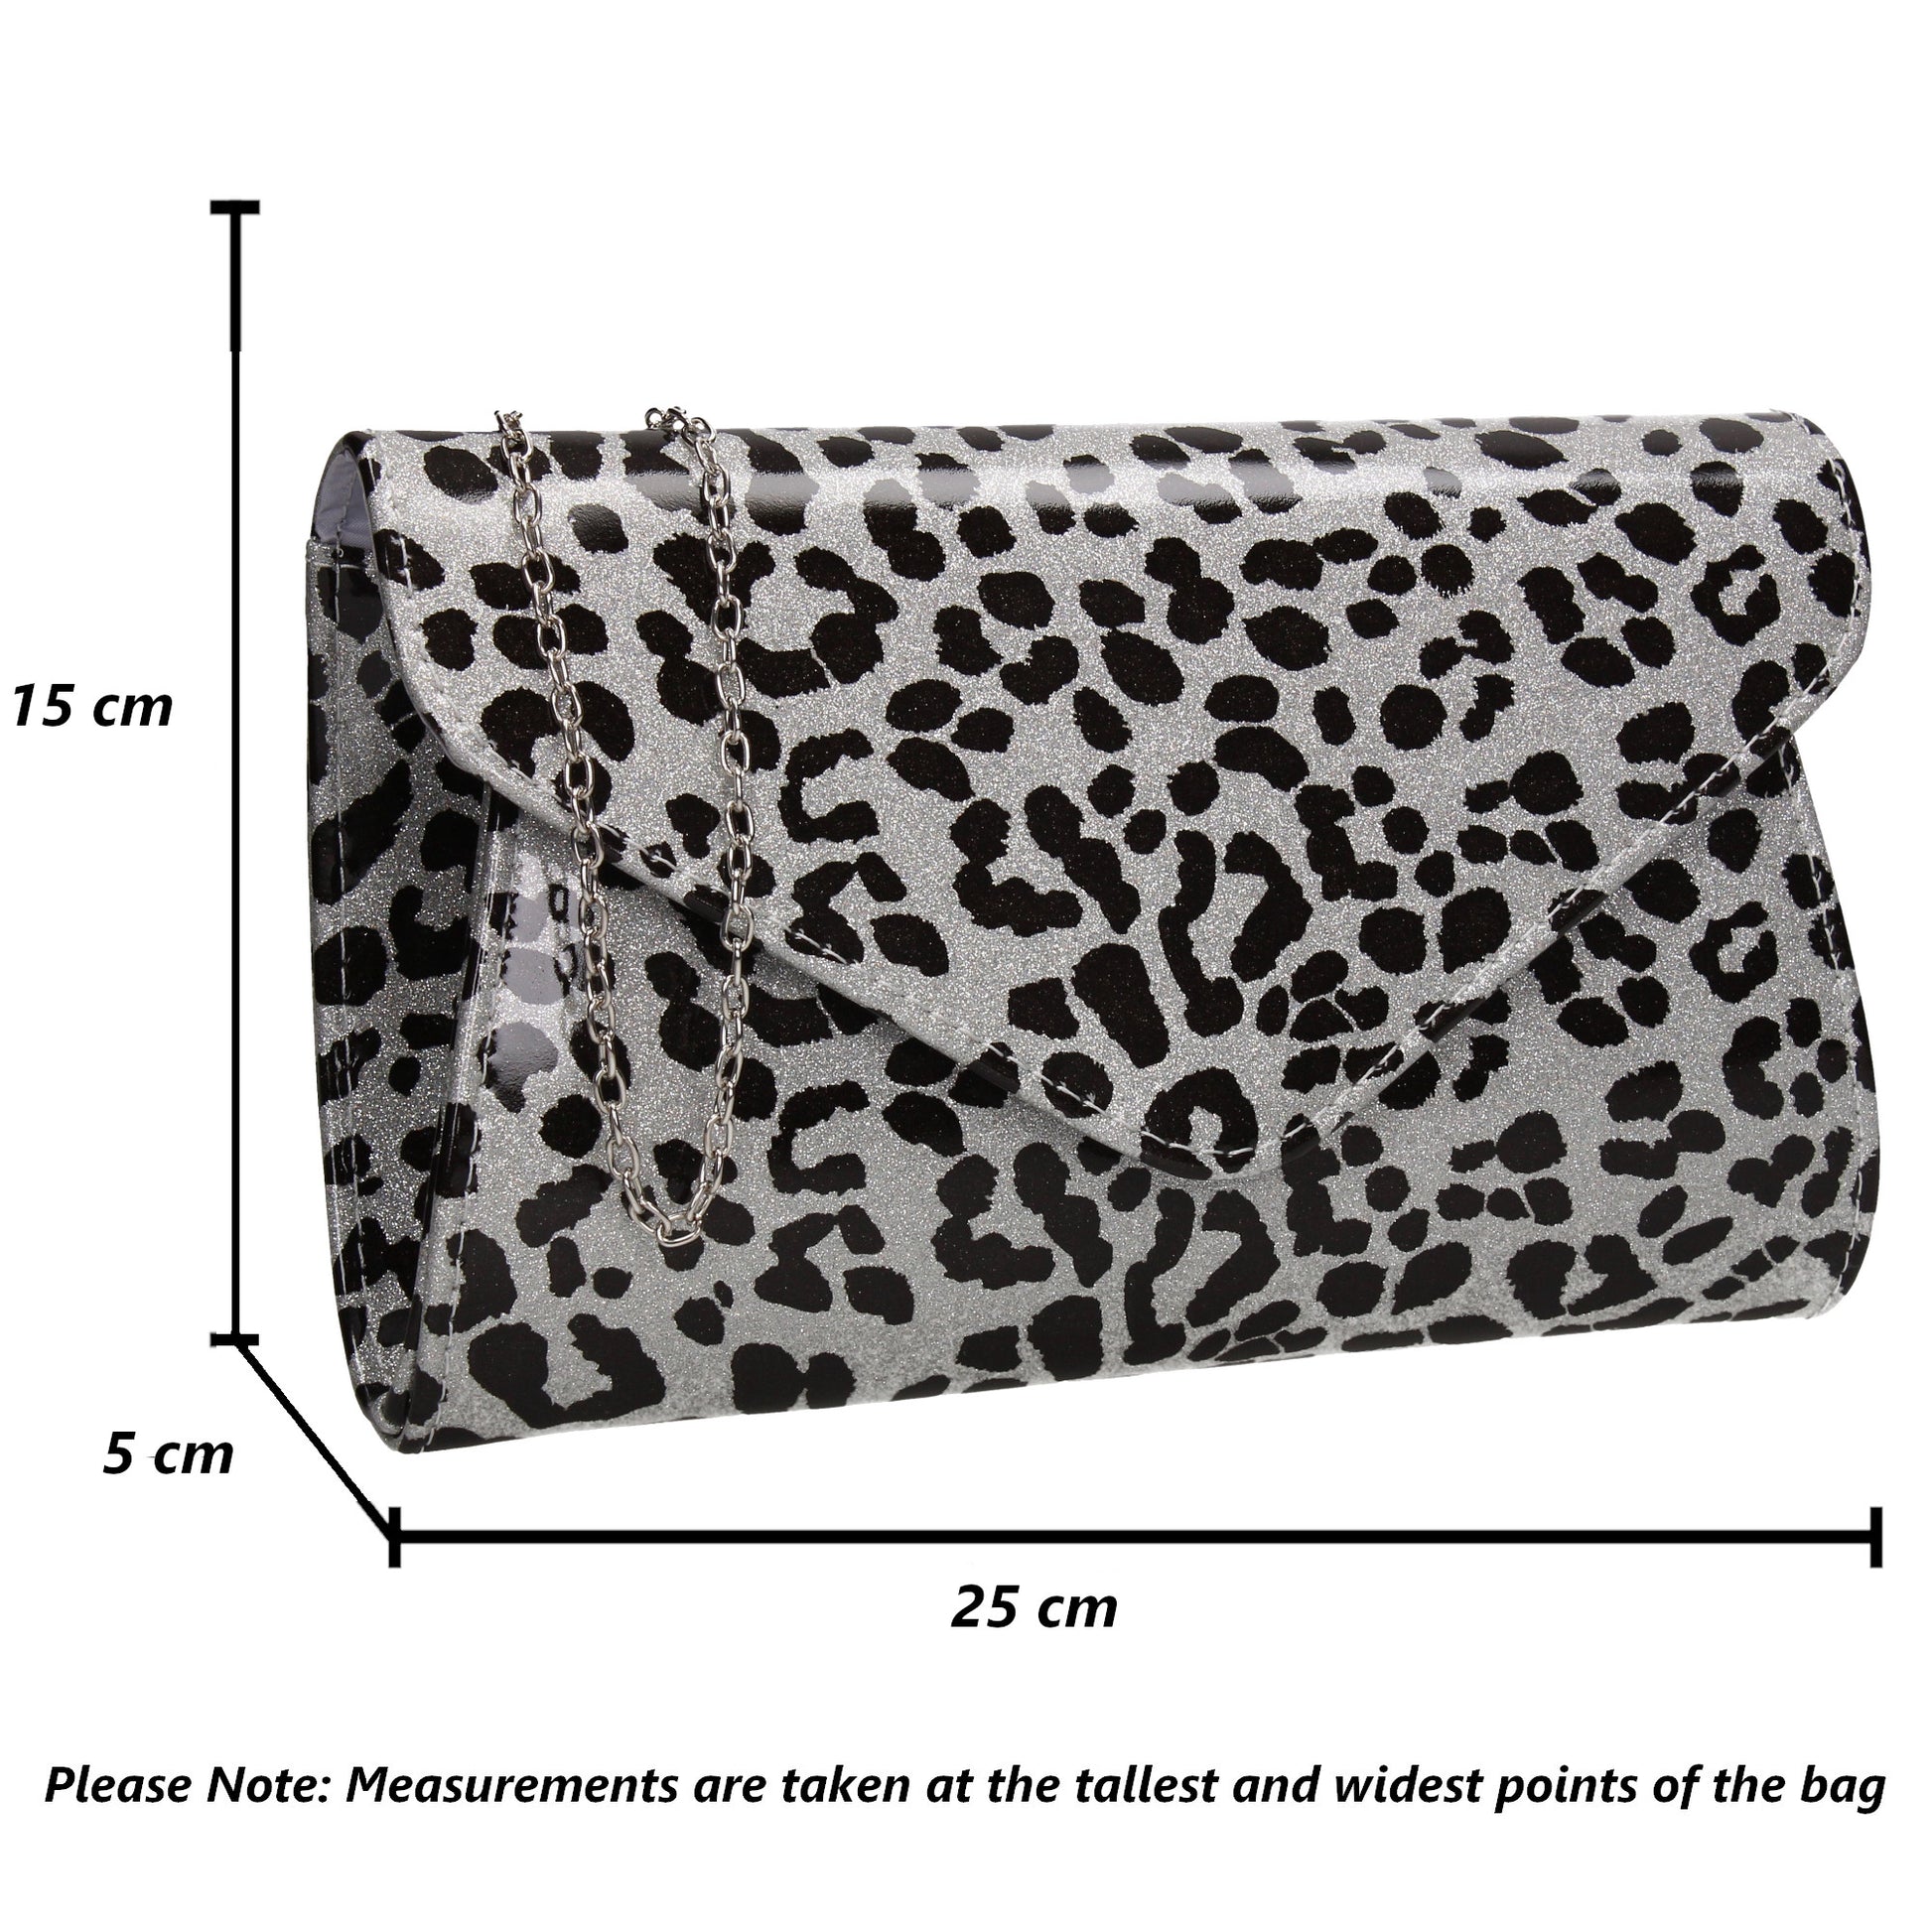 SWANKYSWANS Leoni Leopard Print Clutch Bag Silver